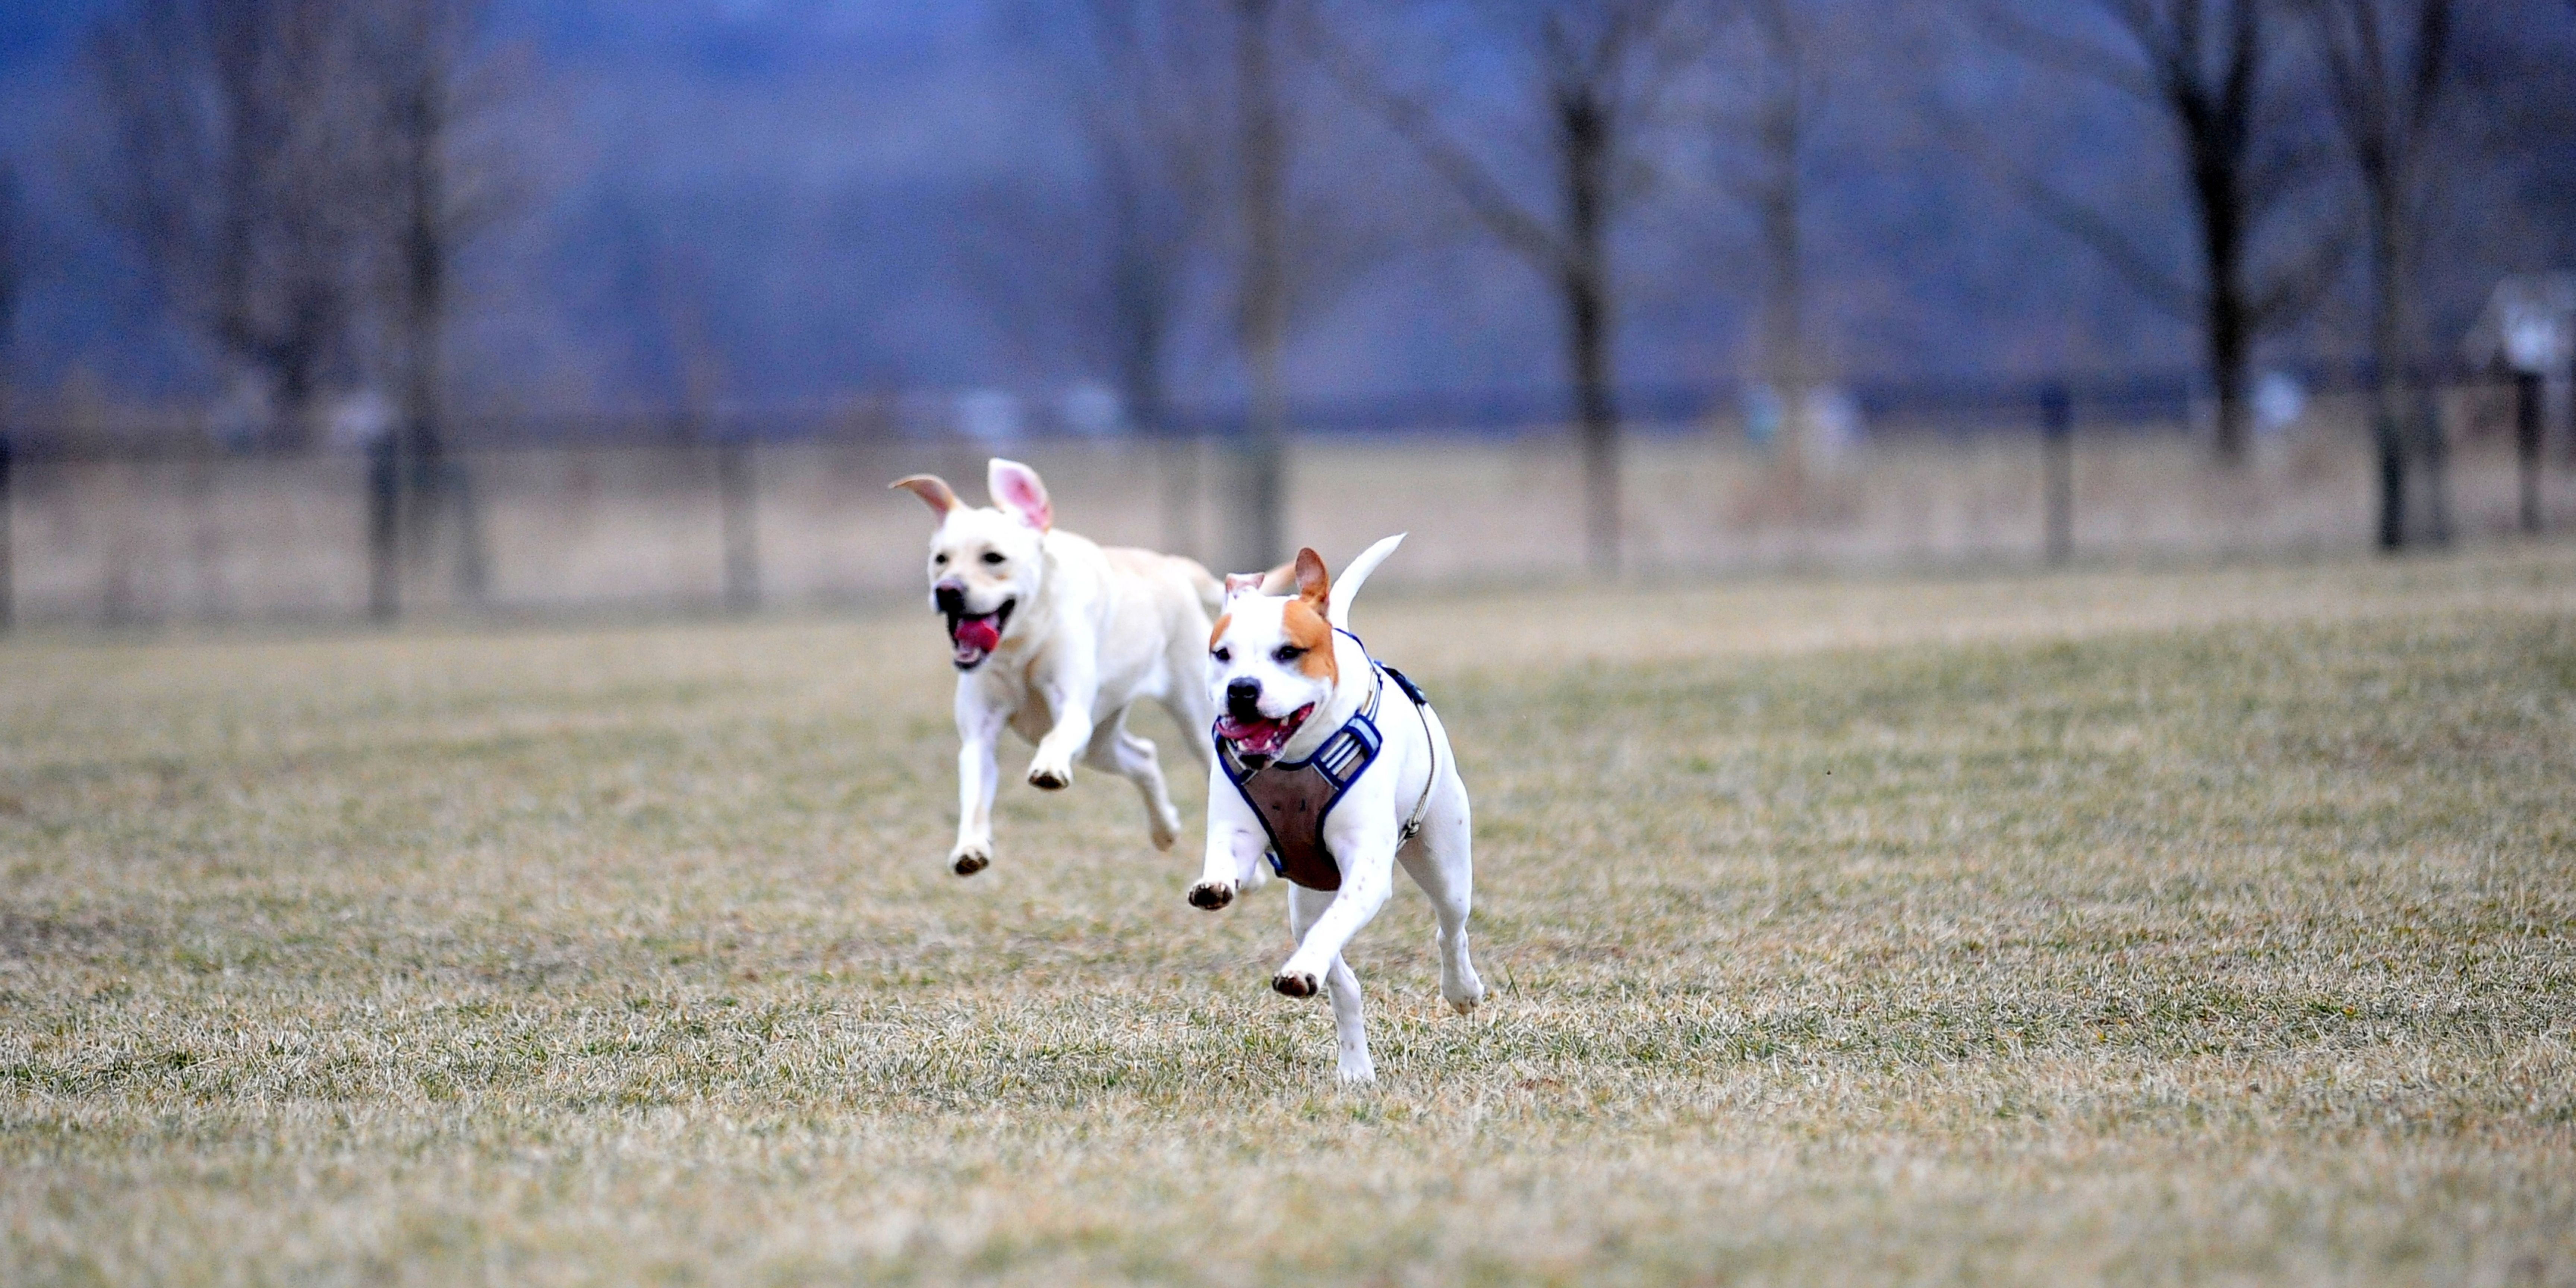 White dogs running on green grass